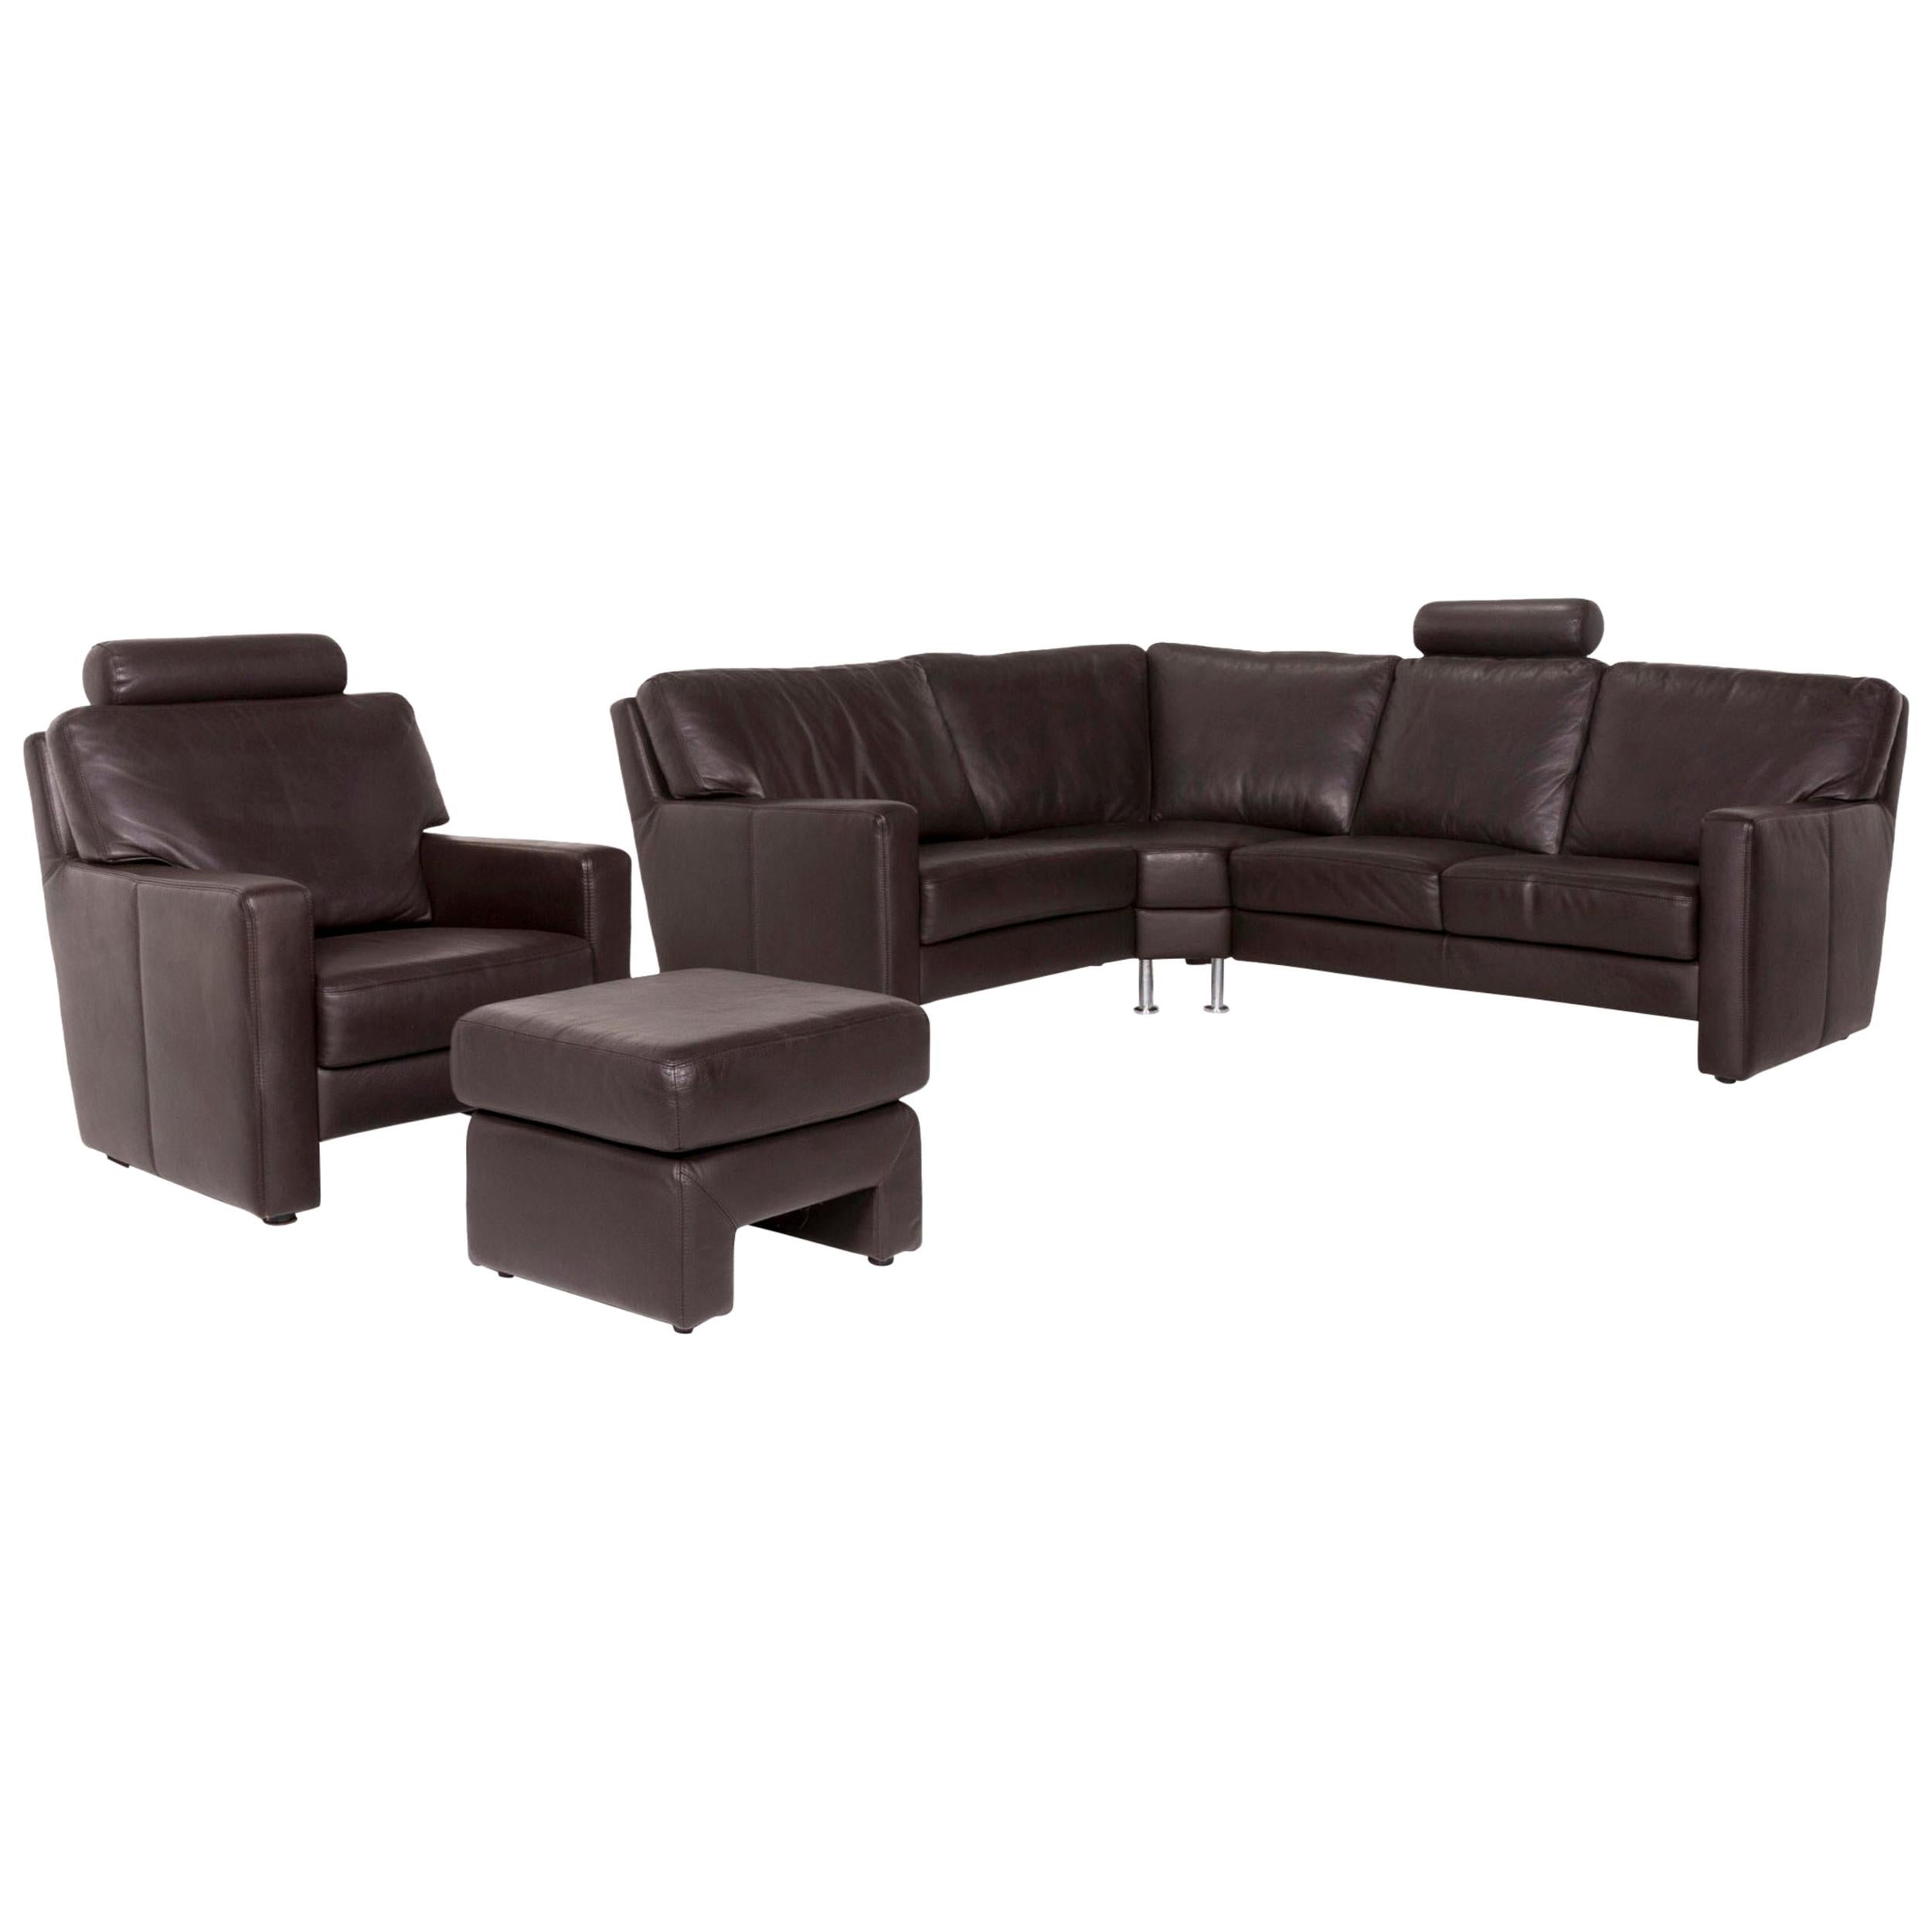 Sample Ring Leather Sofa Set Brown Dark Brown 1 Corner Sofa 1 Armchair Incl For Sale